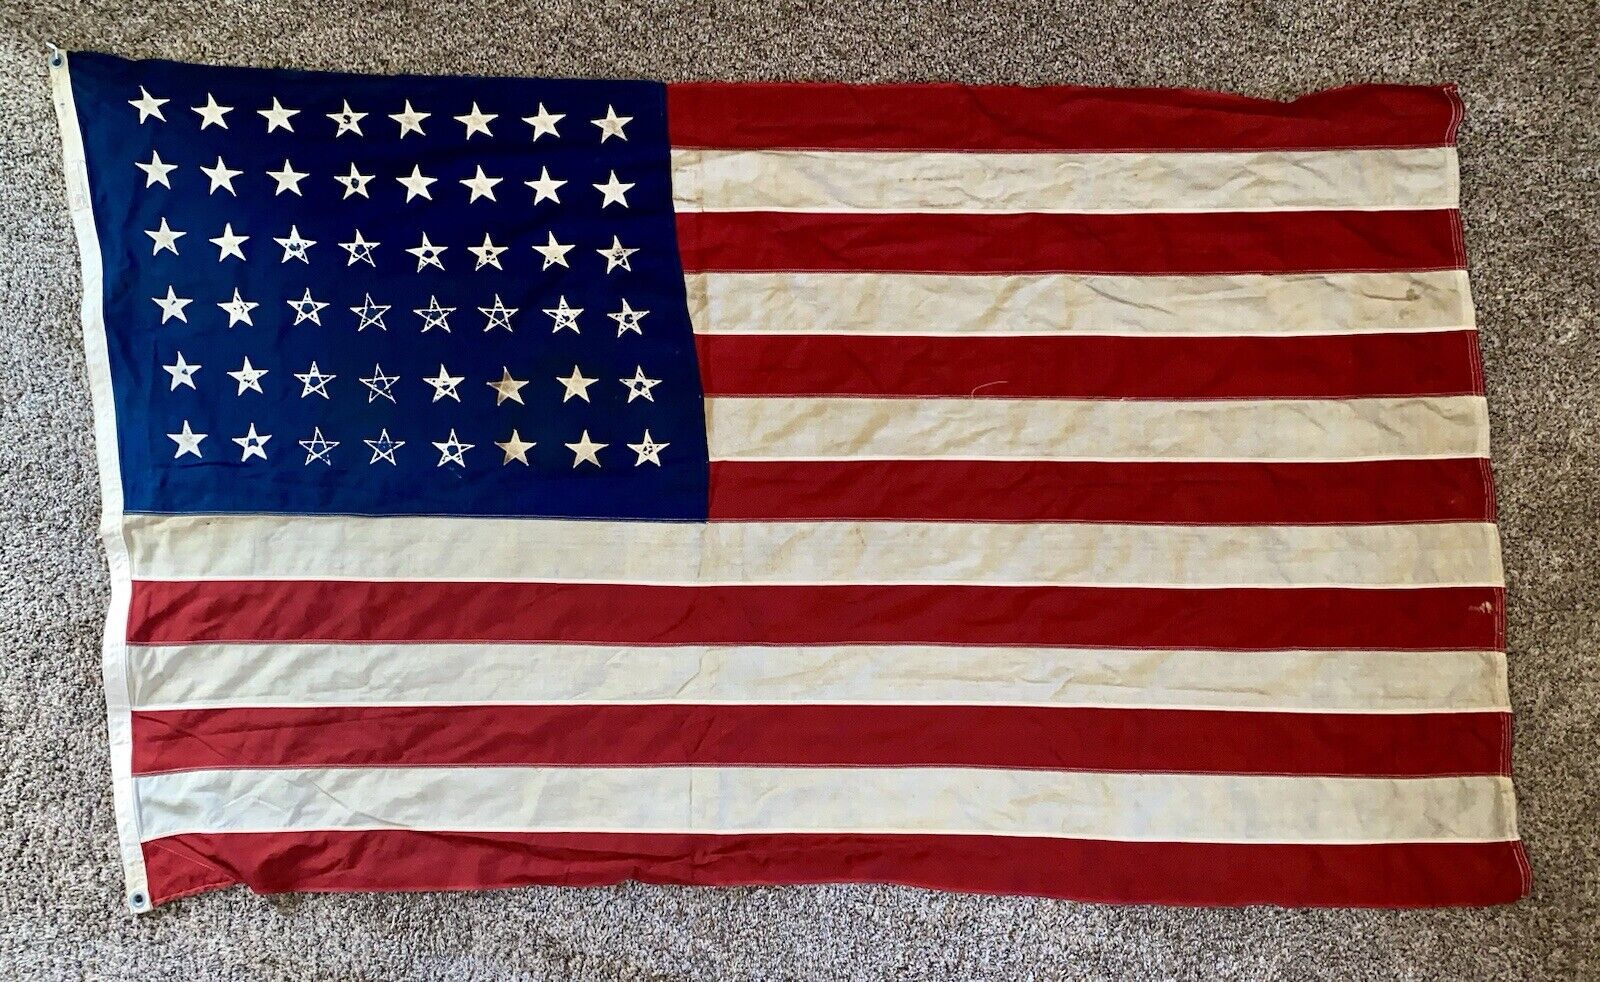 Original Vintage WWII Era Defiance Annin 48 STARS U.S. FLAG 4x6 FT